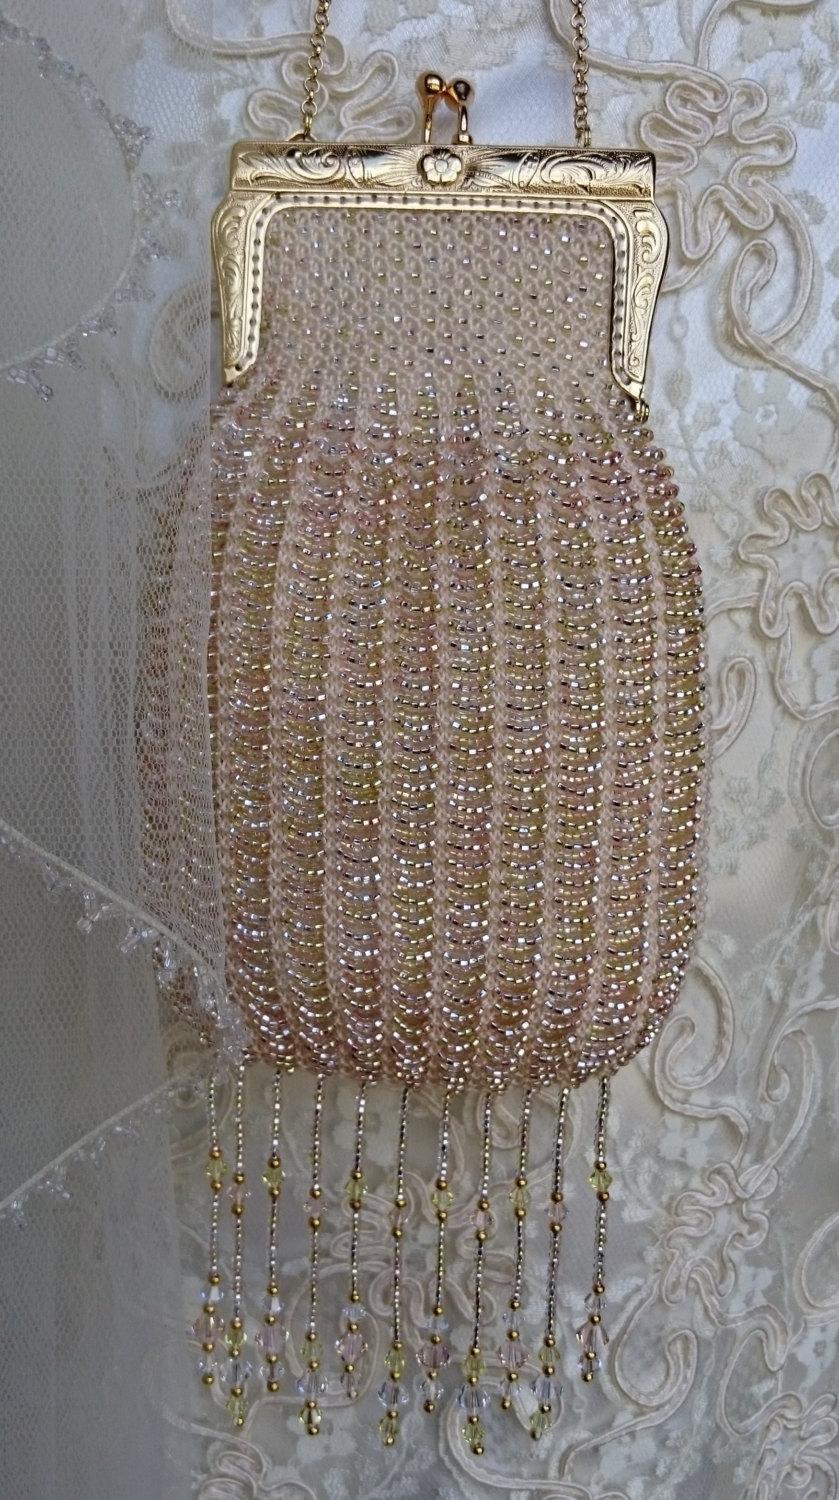 Mariage - SALE - Wedding Purse, Beaded Bridal Purse, Unique Bridal Purse, Bead Knitted Purse, Handmade, Czech Beads, Swarovski Crystals